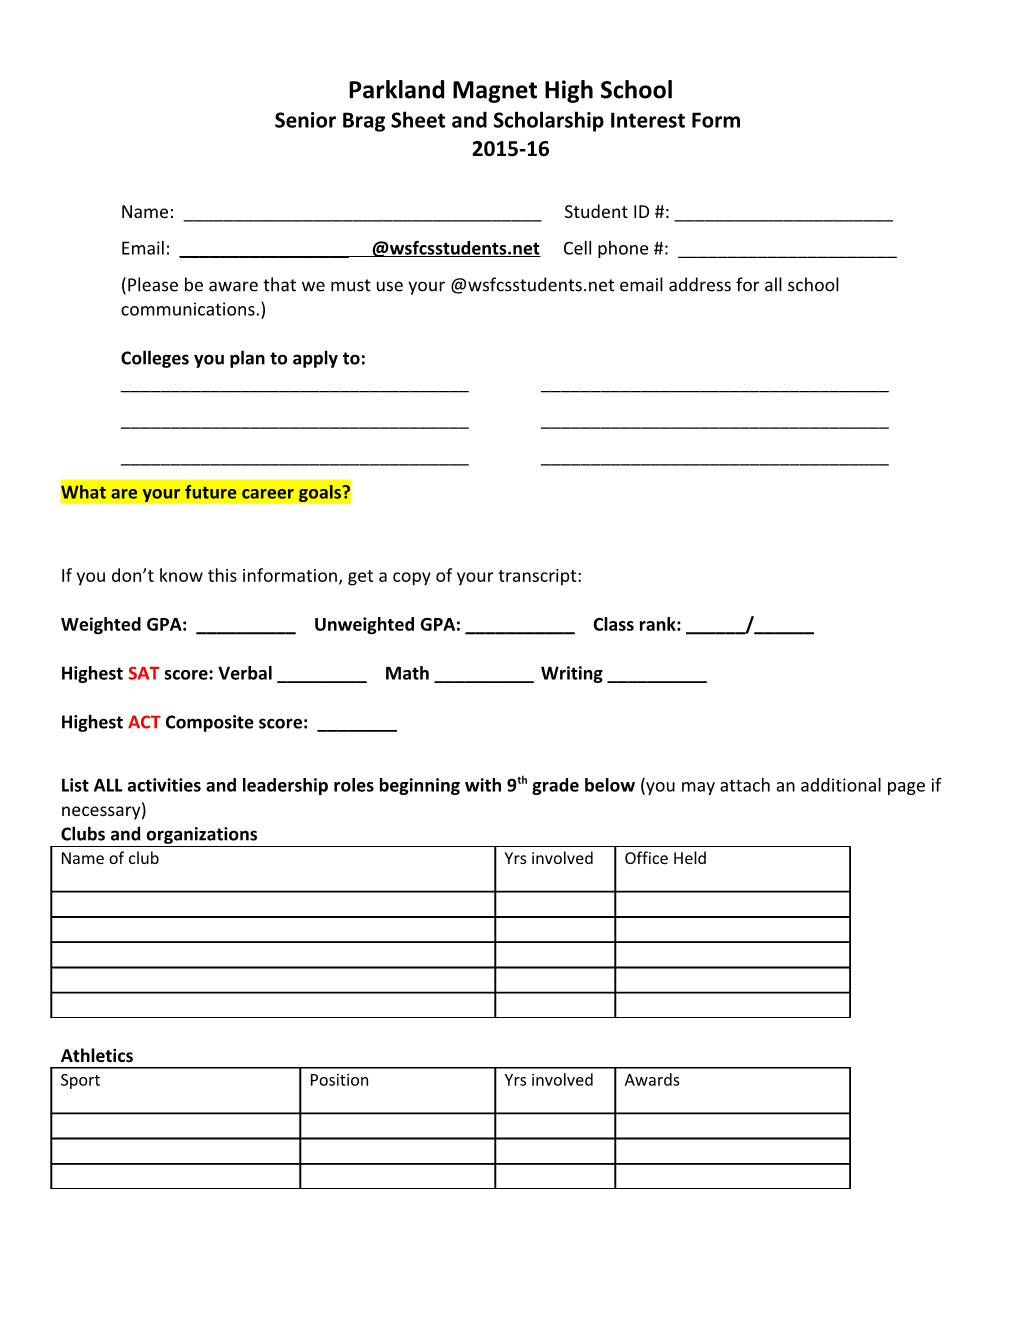 Senior Brag Sheet and Scholarship Interest Form